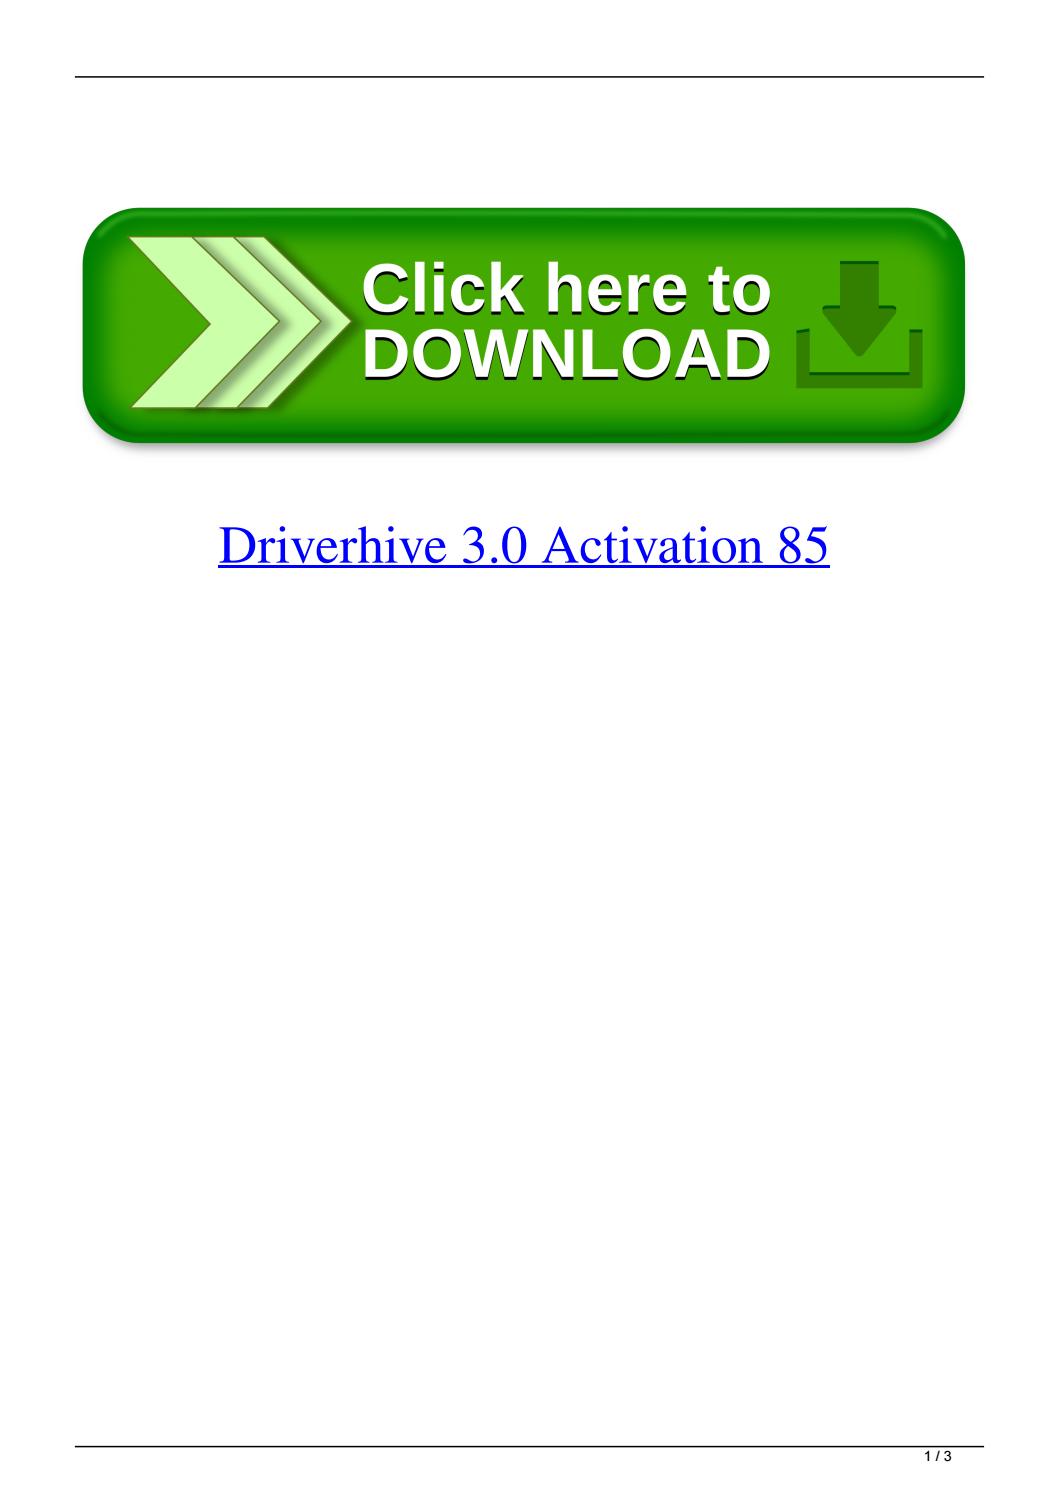 Driverhive 3.0 crack download